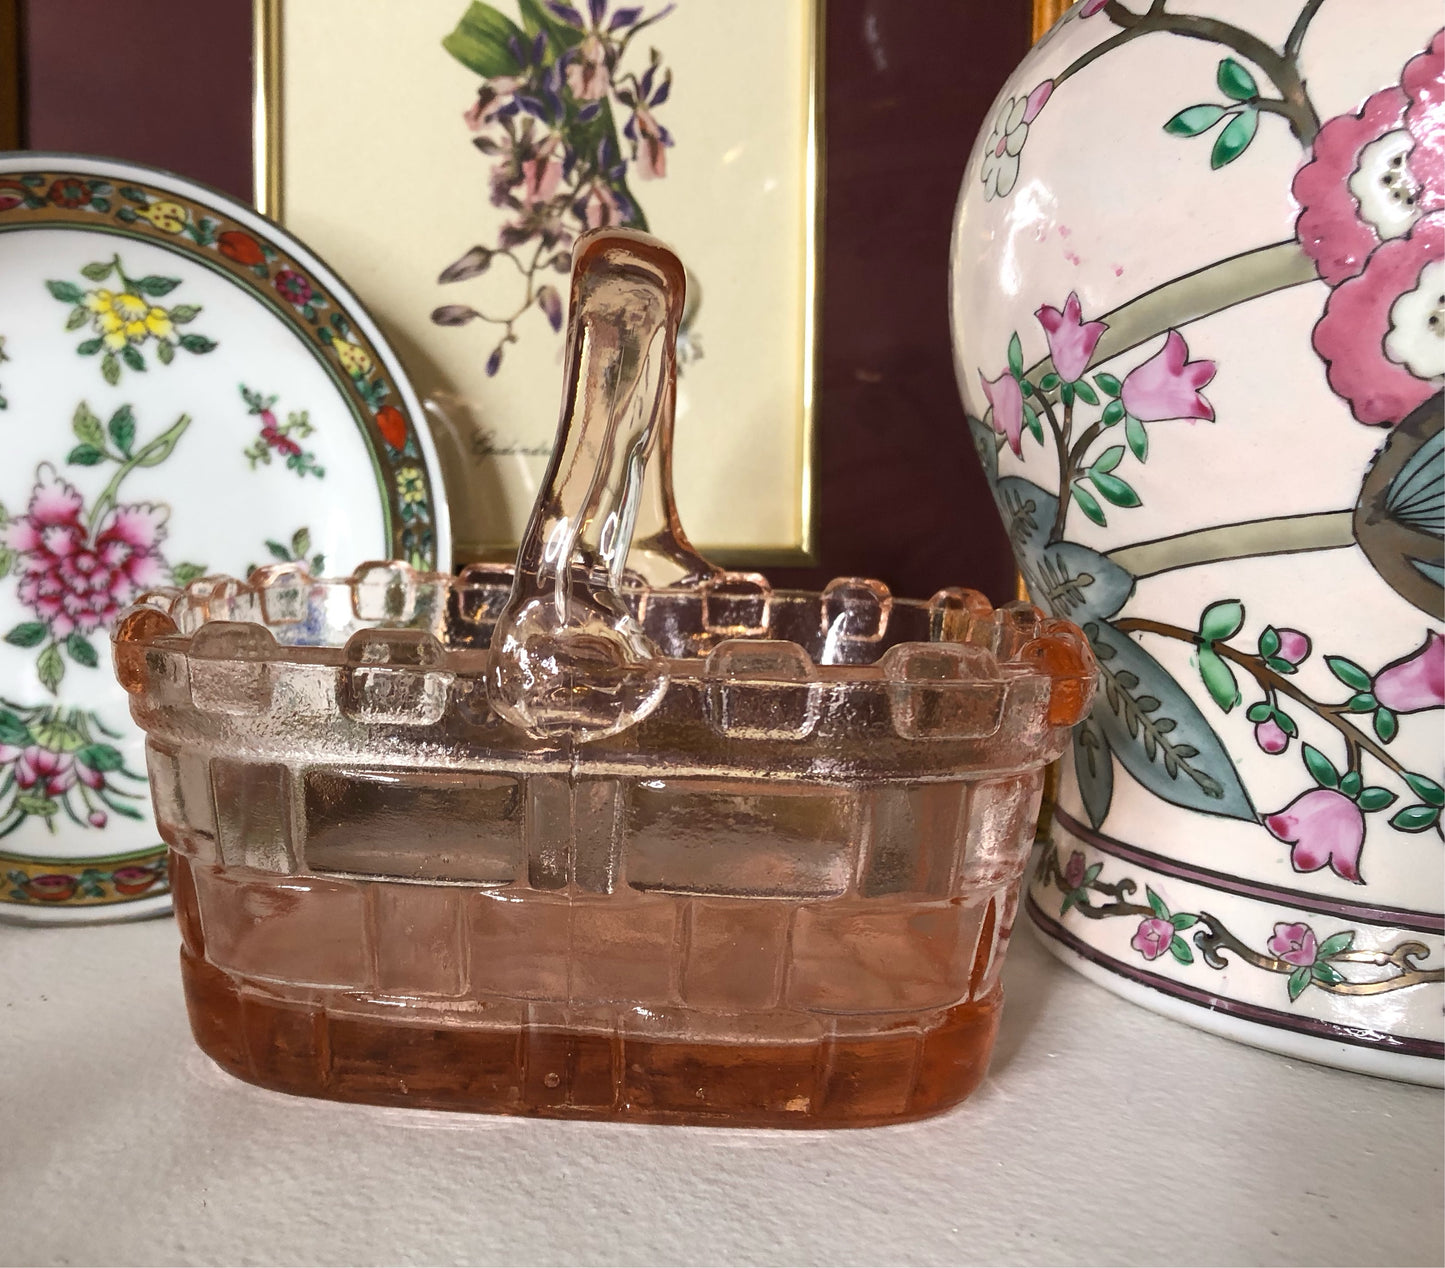 Vintage pink depression glass basket - Excellent condition!